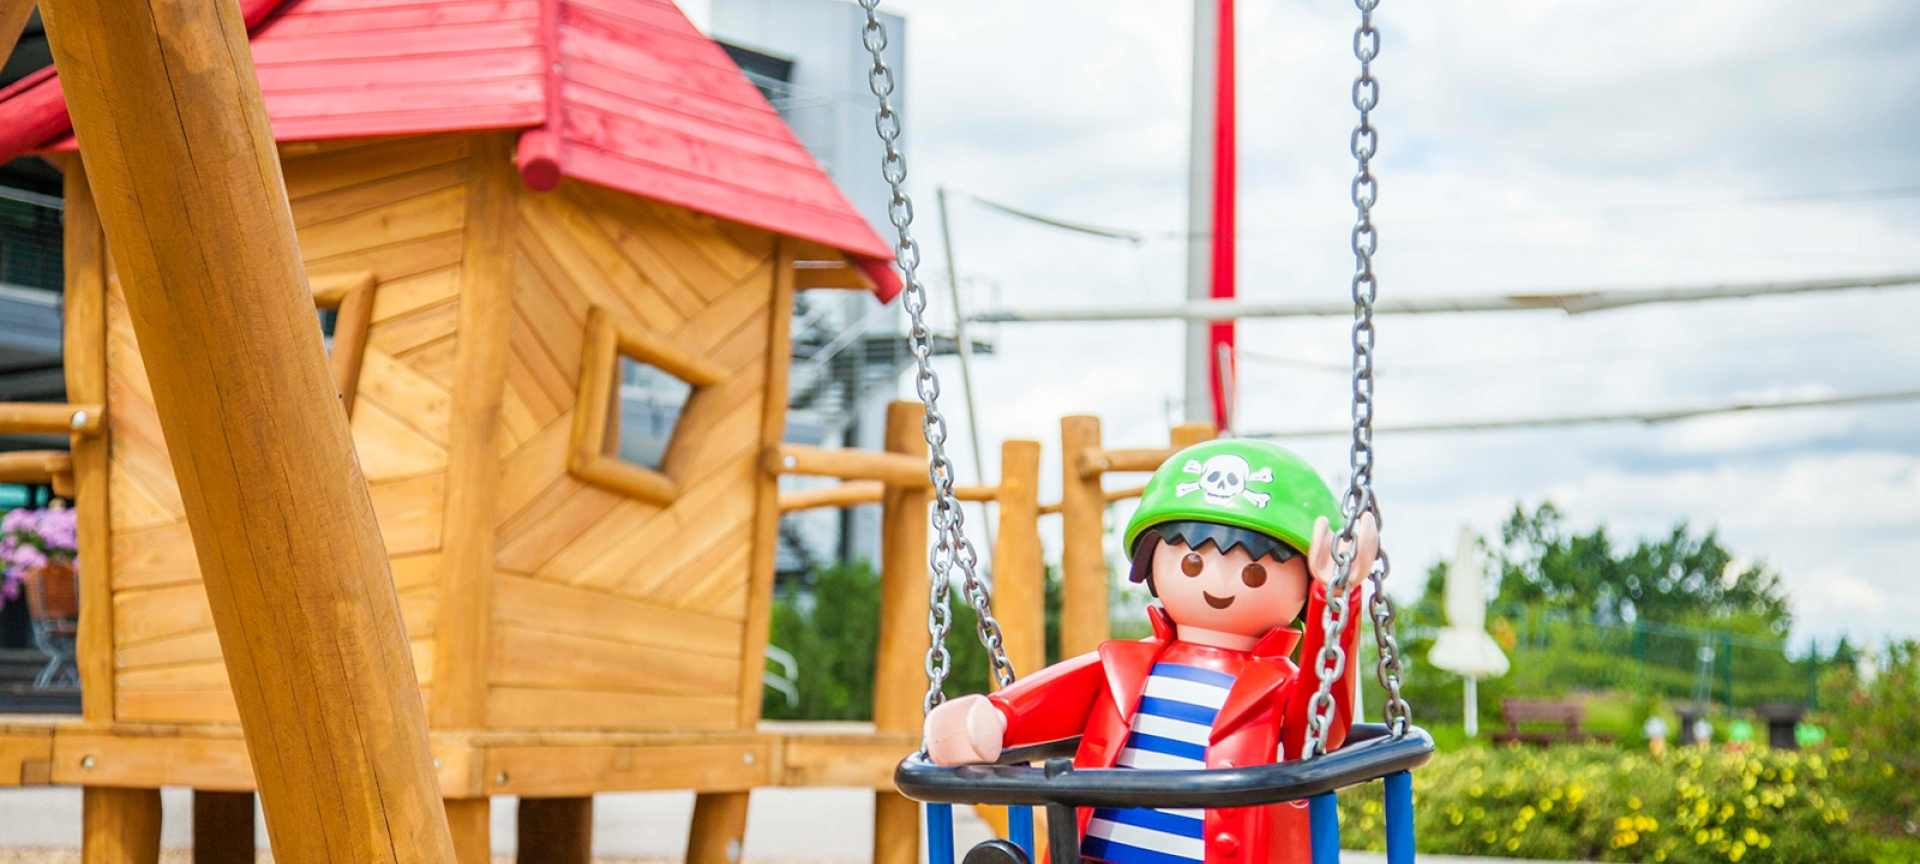 Faszinierend Playmobil Funpark Offnungszeiten Bilder www inf inet com